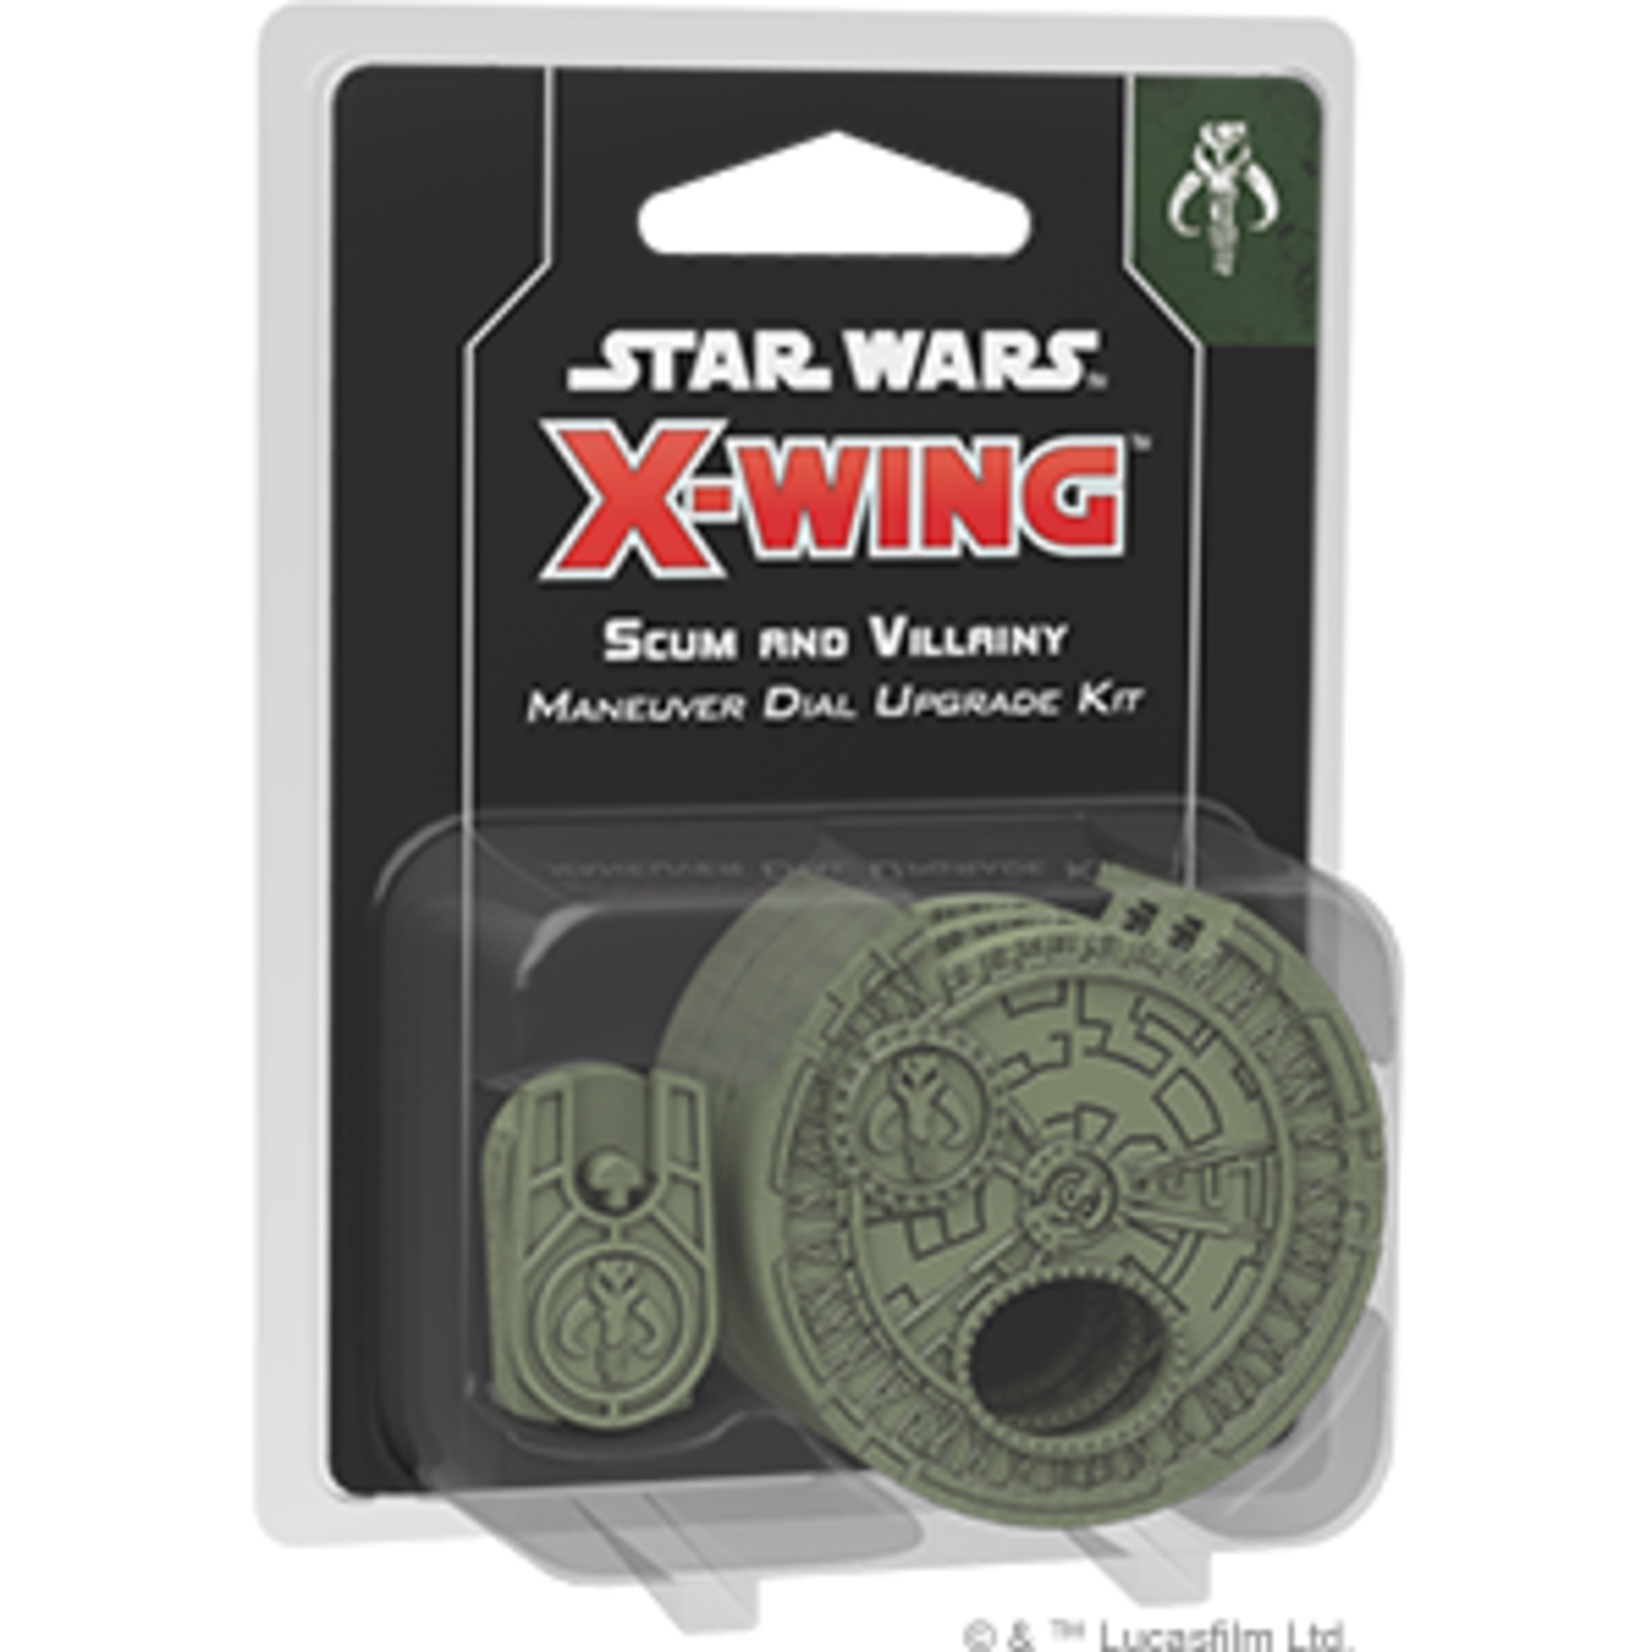 Fantasy Flight Games Star Wars X-Wing: 2nd Edition - Scum and Villainy Maneuver Dial Upgrade Kit